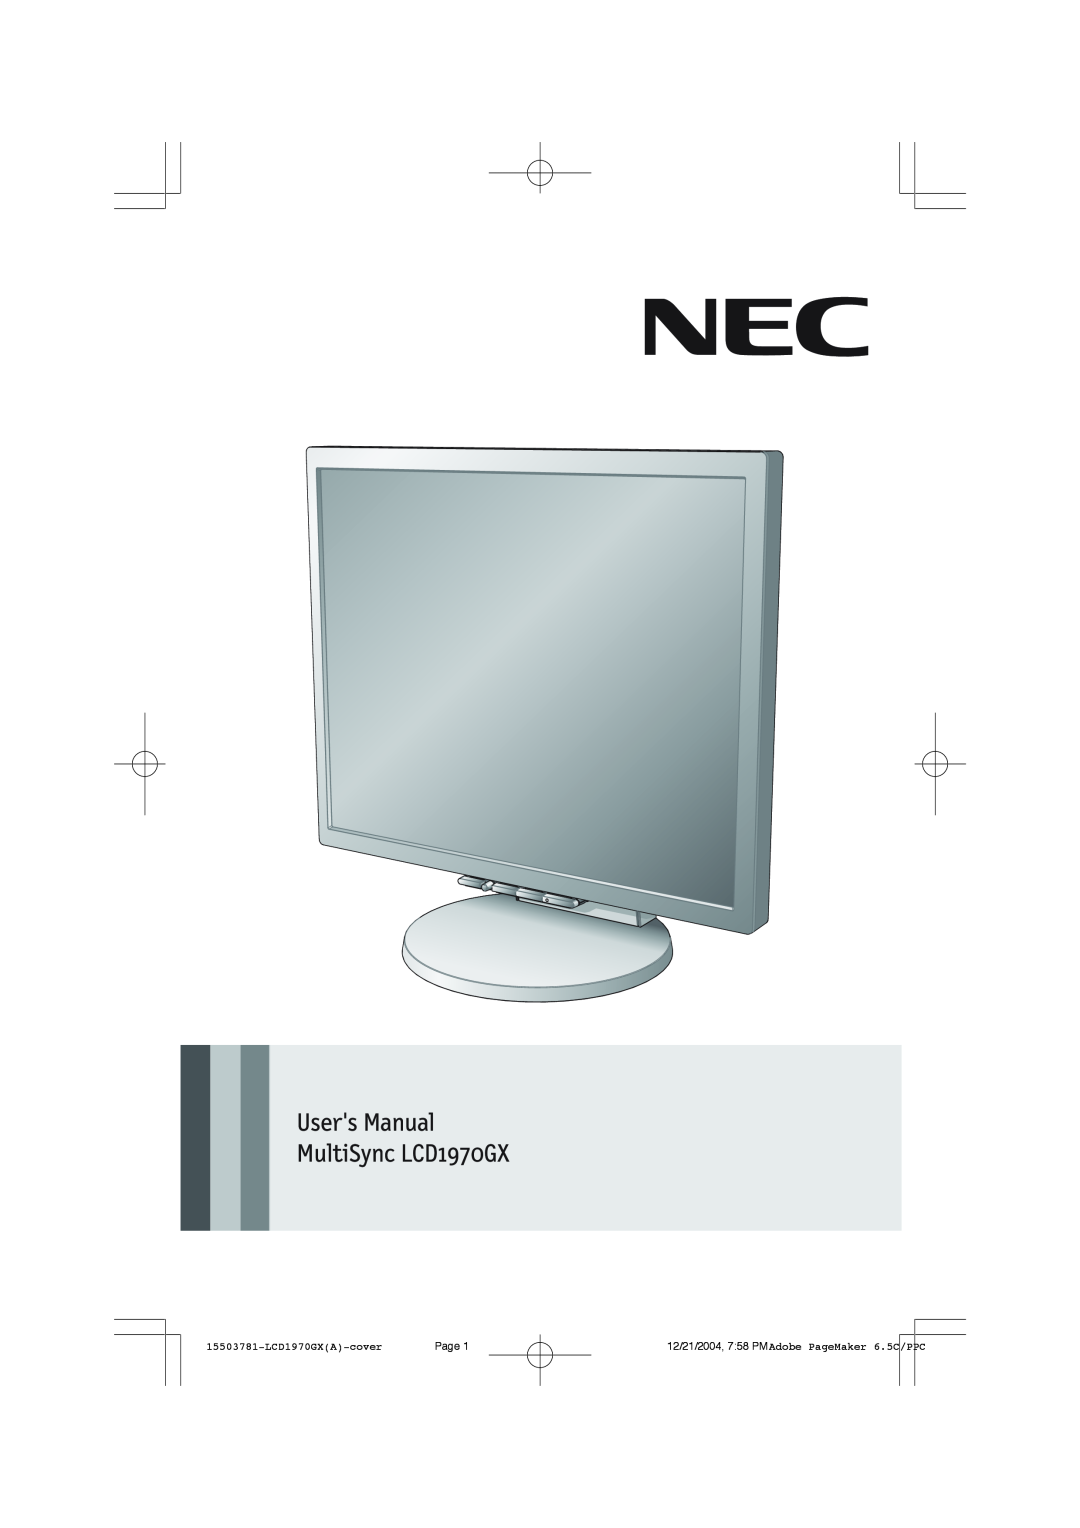 NEC user manual 15503781-LCD1970GXA-cover, 12/21/2004, 7 58 PMAdobe PageMaker 6.5C/PPC 